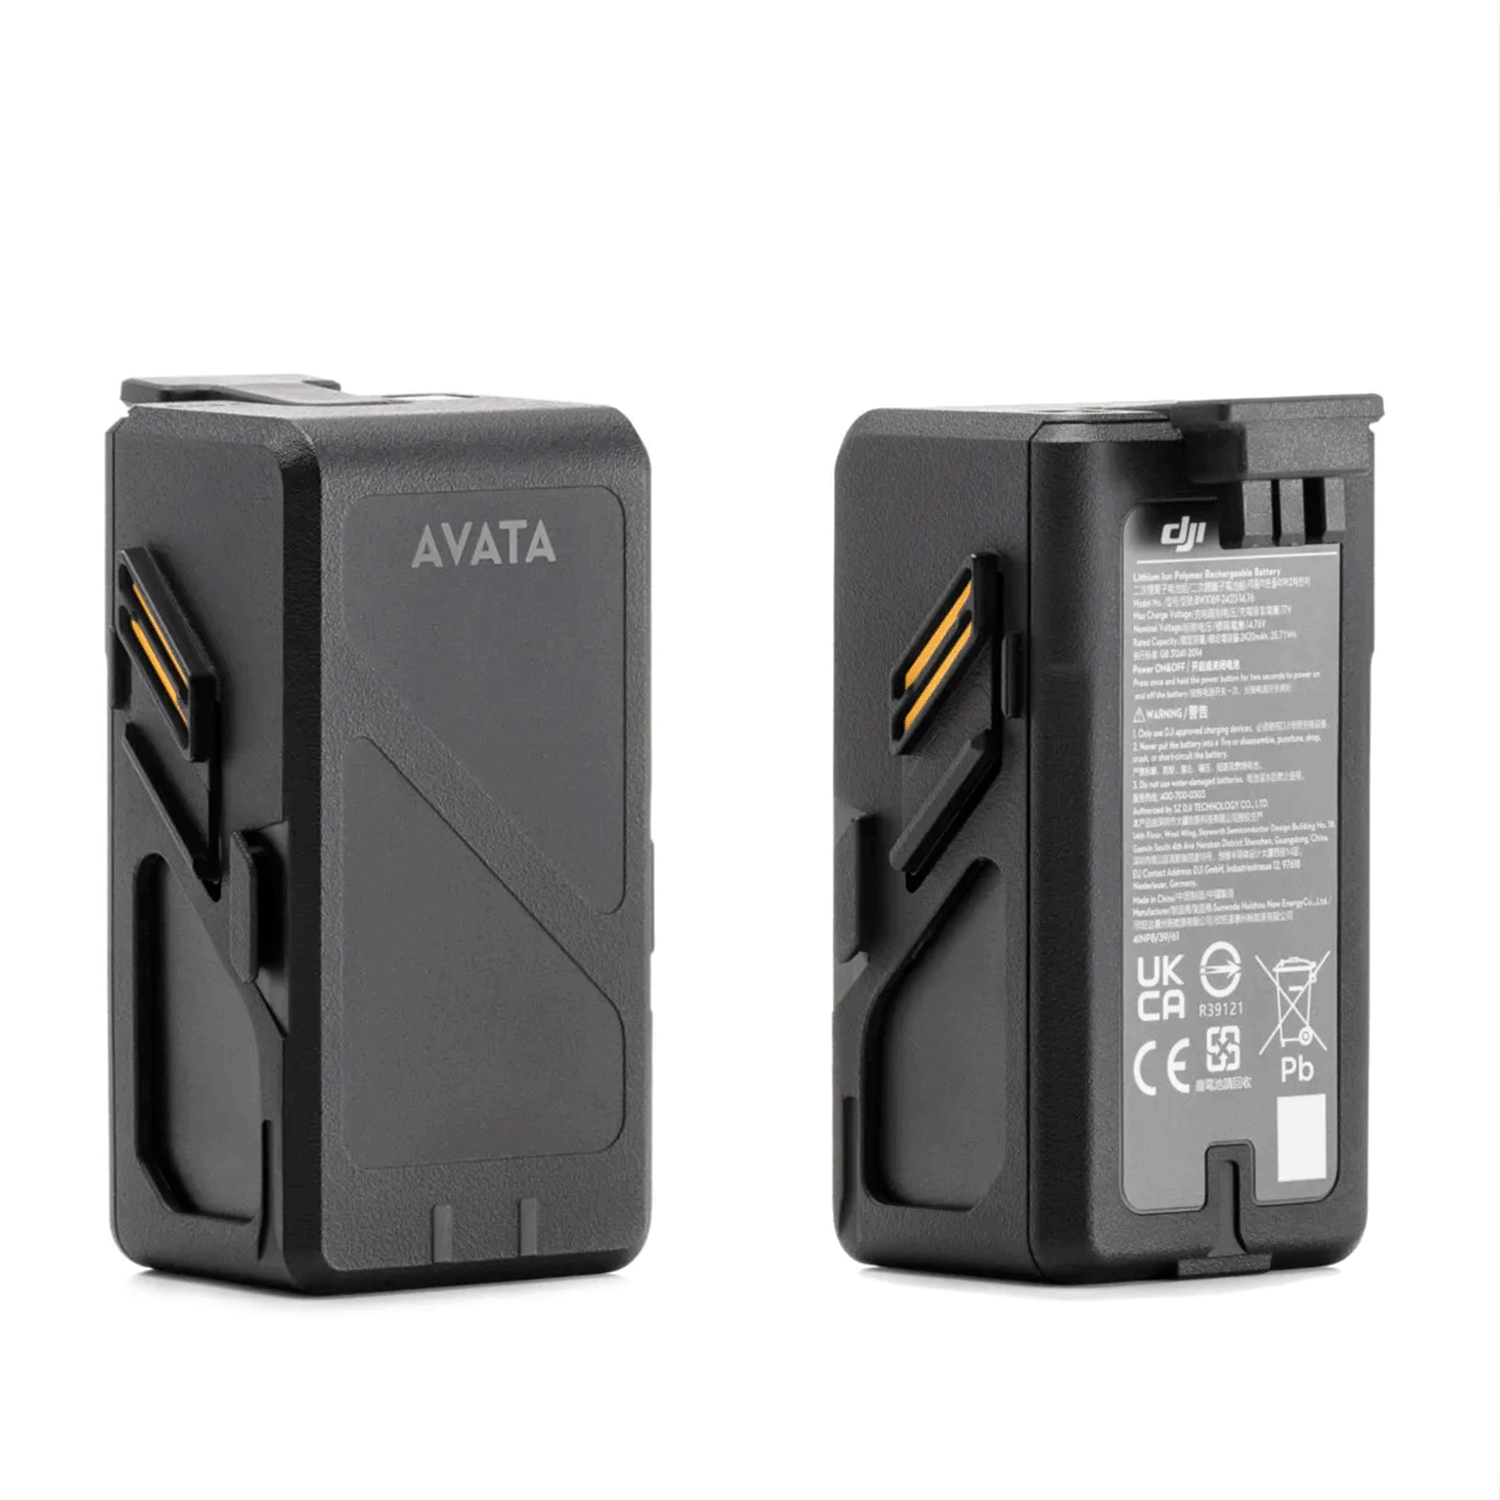 Bateria + Hub DJI Fly More Kit Combo para Avata